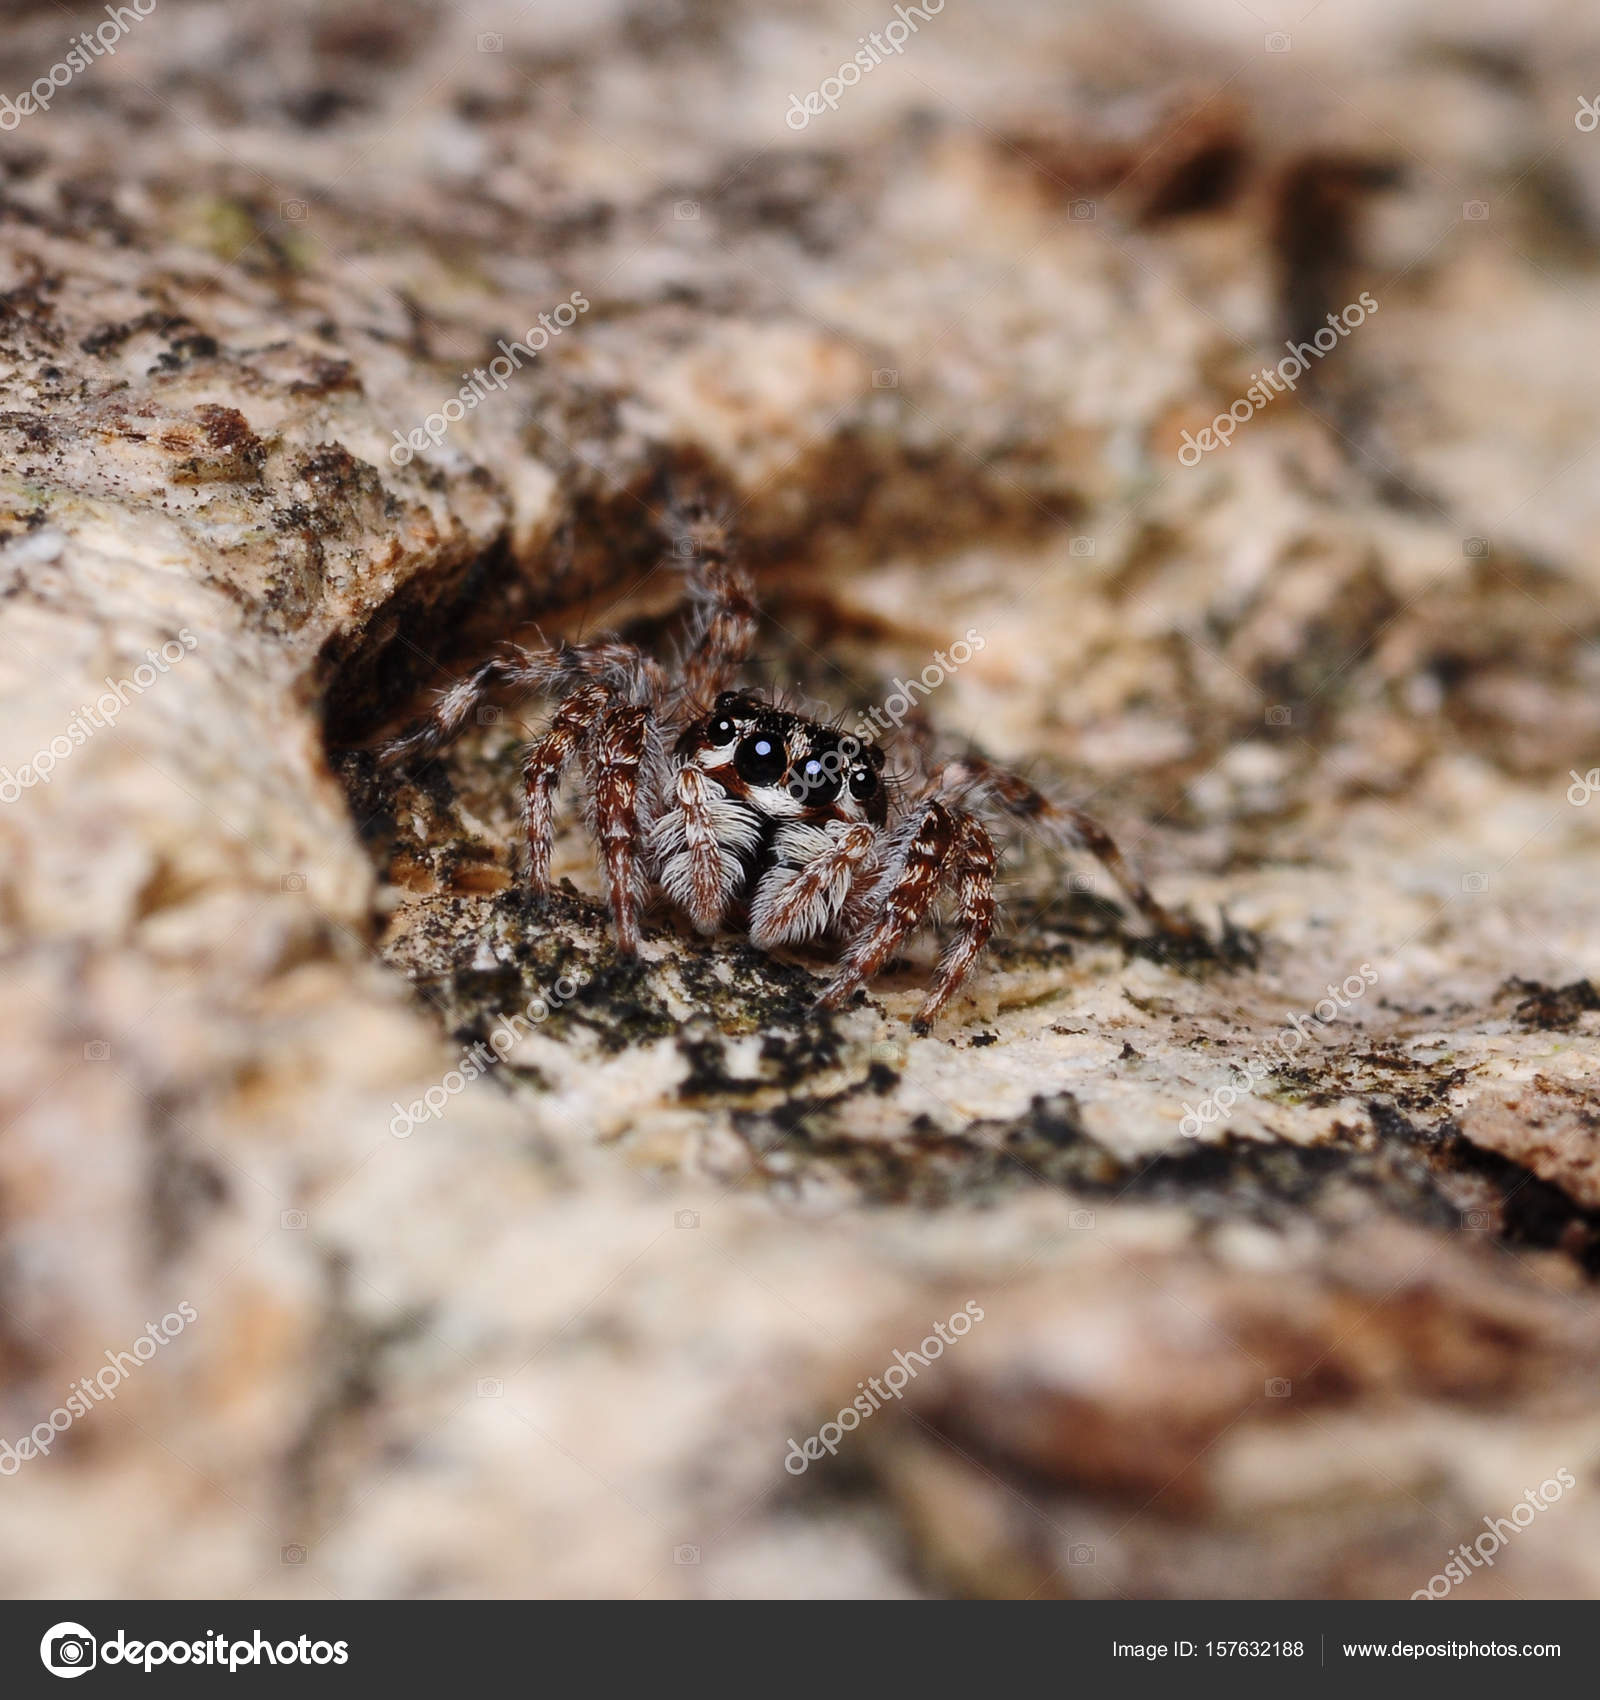 close up of jumper spider — Stock Photo © weradeposit #157632188